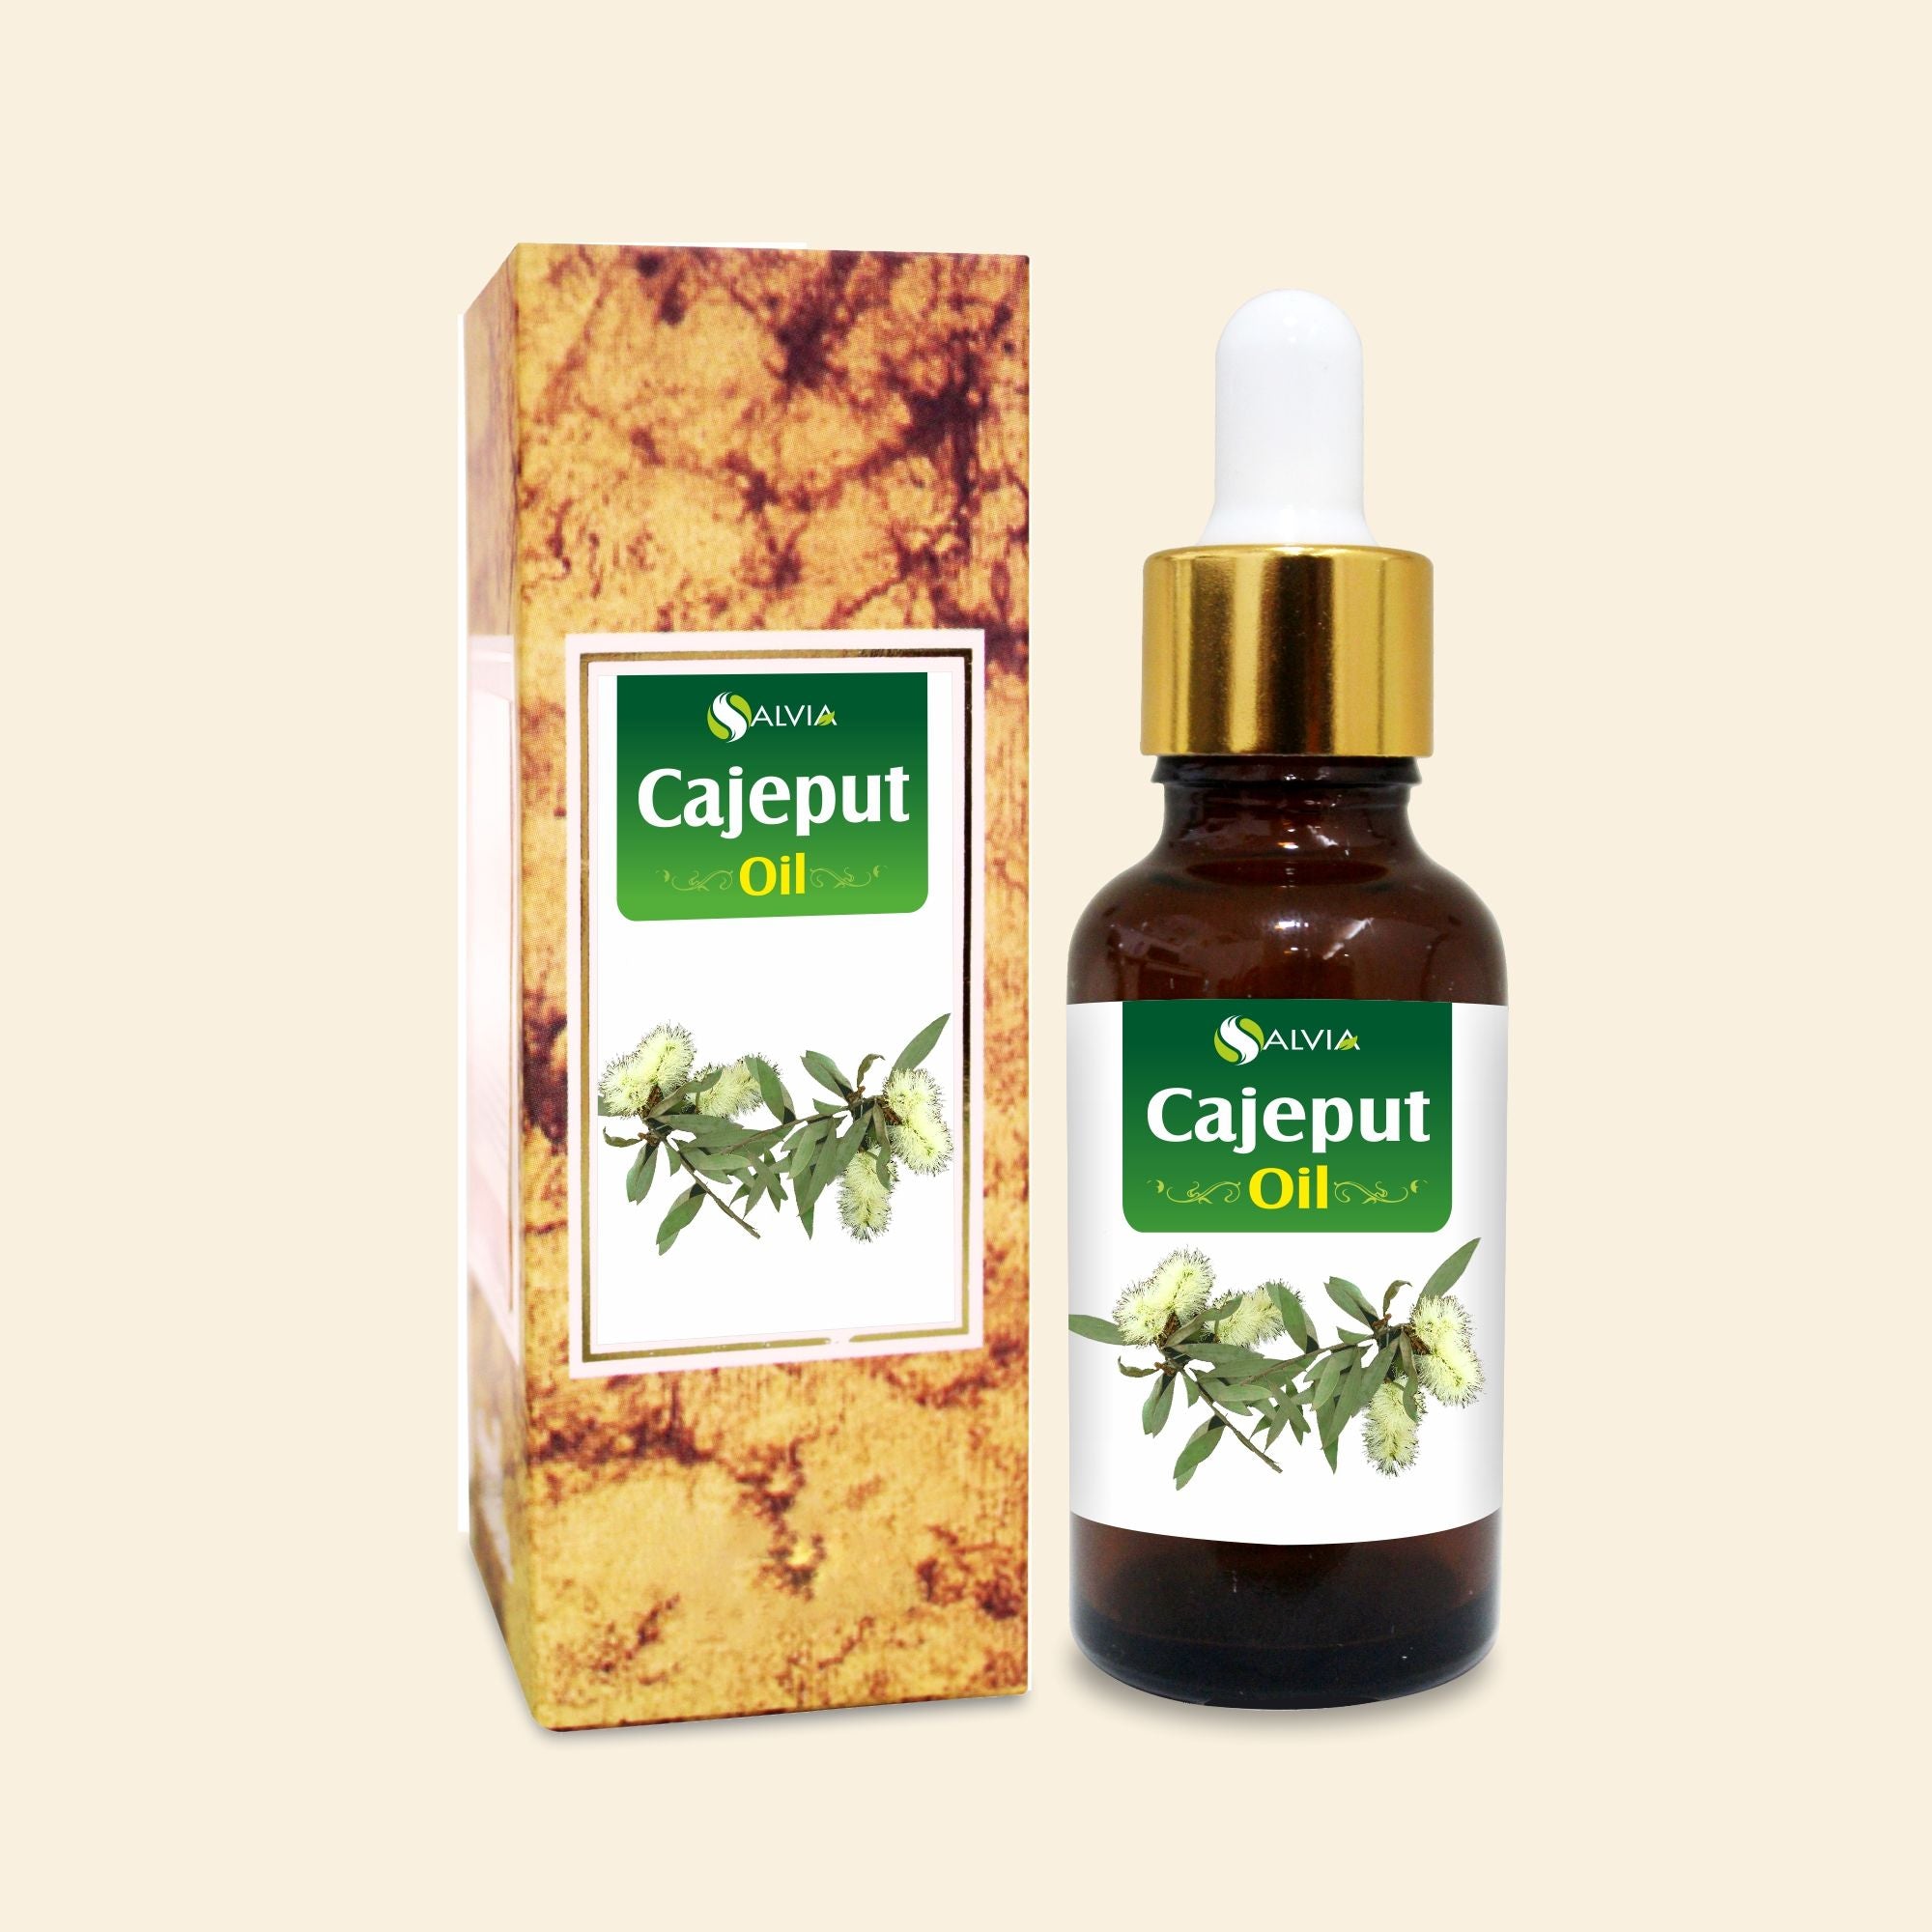 Salvia Natural Essential Oils Cajeput Oil (Melaleuca leucadendron) 100% Natural Pure Essential Oil